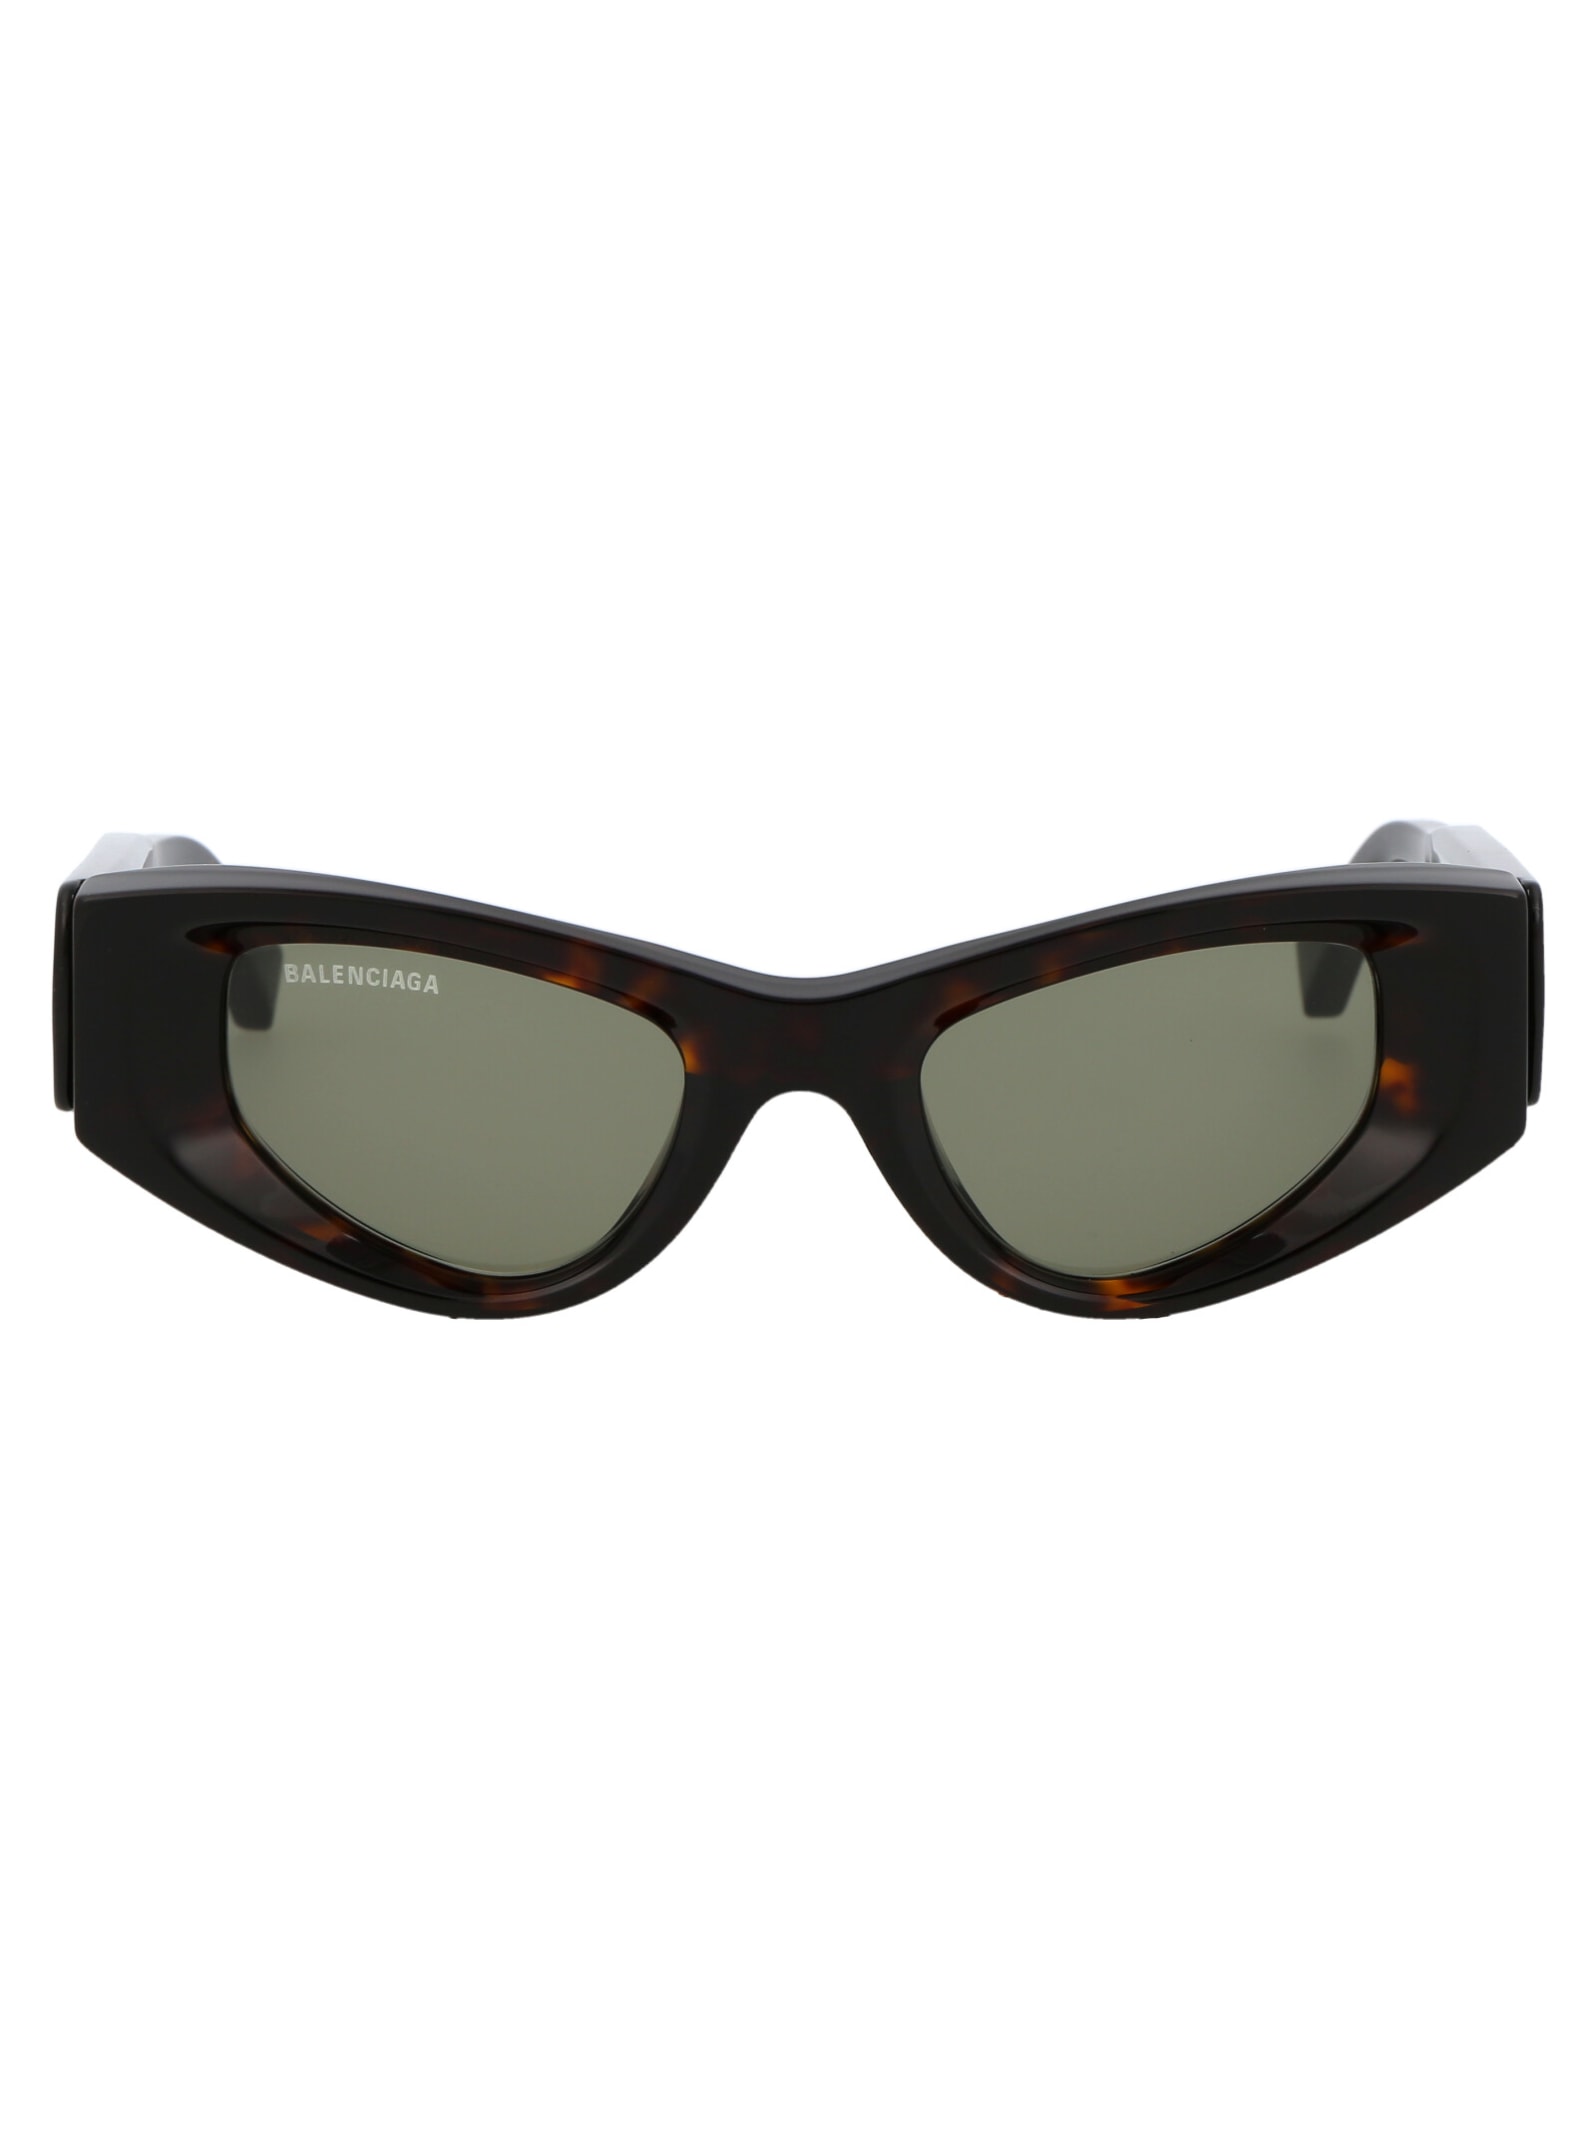 Balenciaga Eyewear Bb0243s Sunglasses